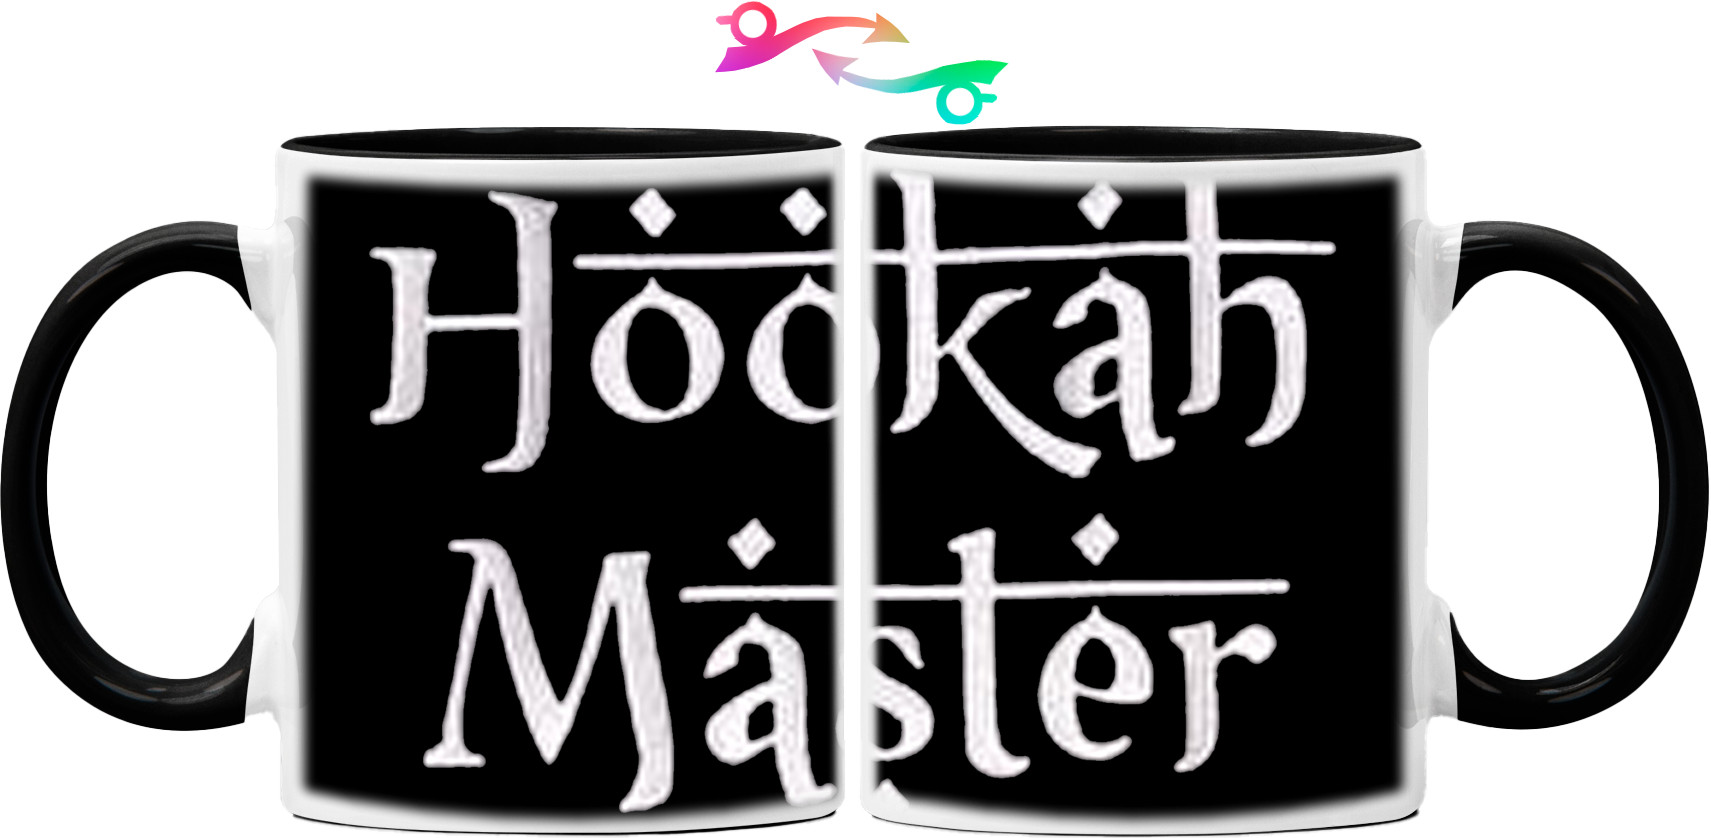 Hookah Master